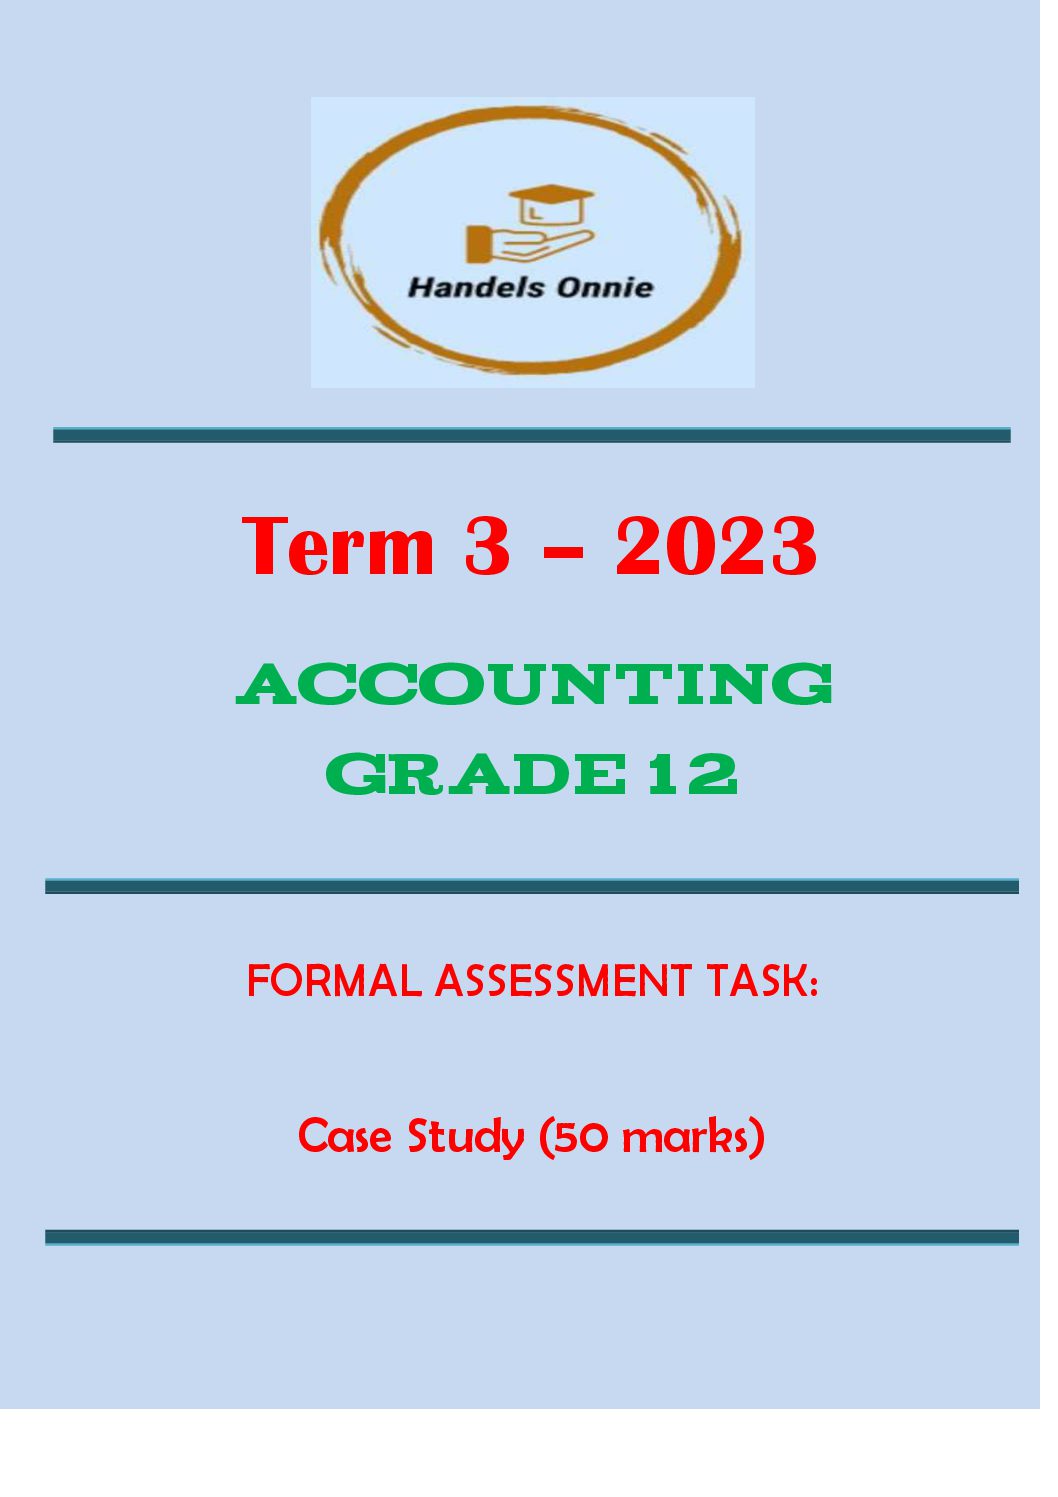 accounting grade 12 case study term 3 2022 memorandum